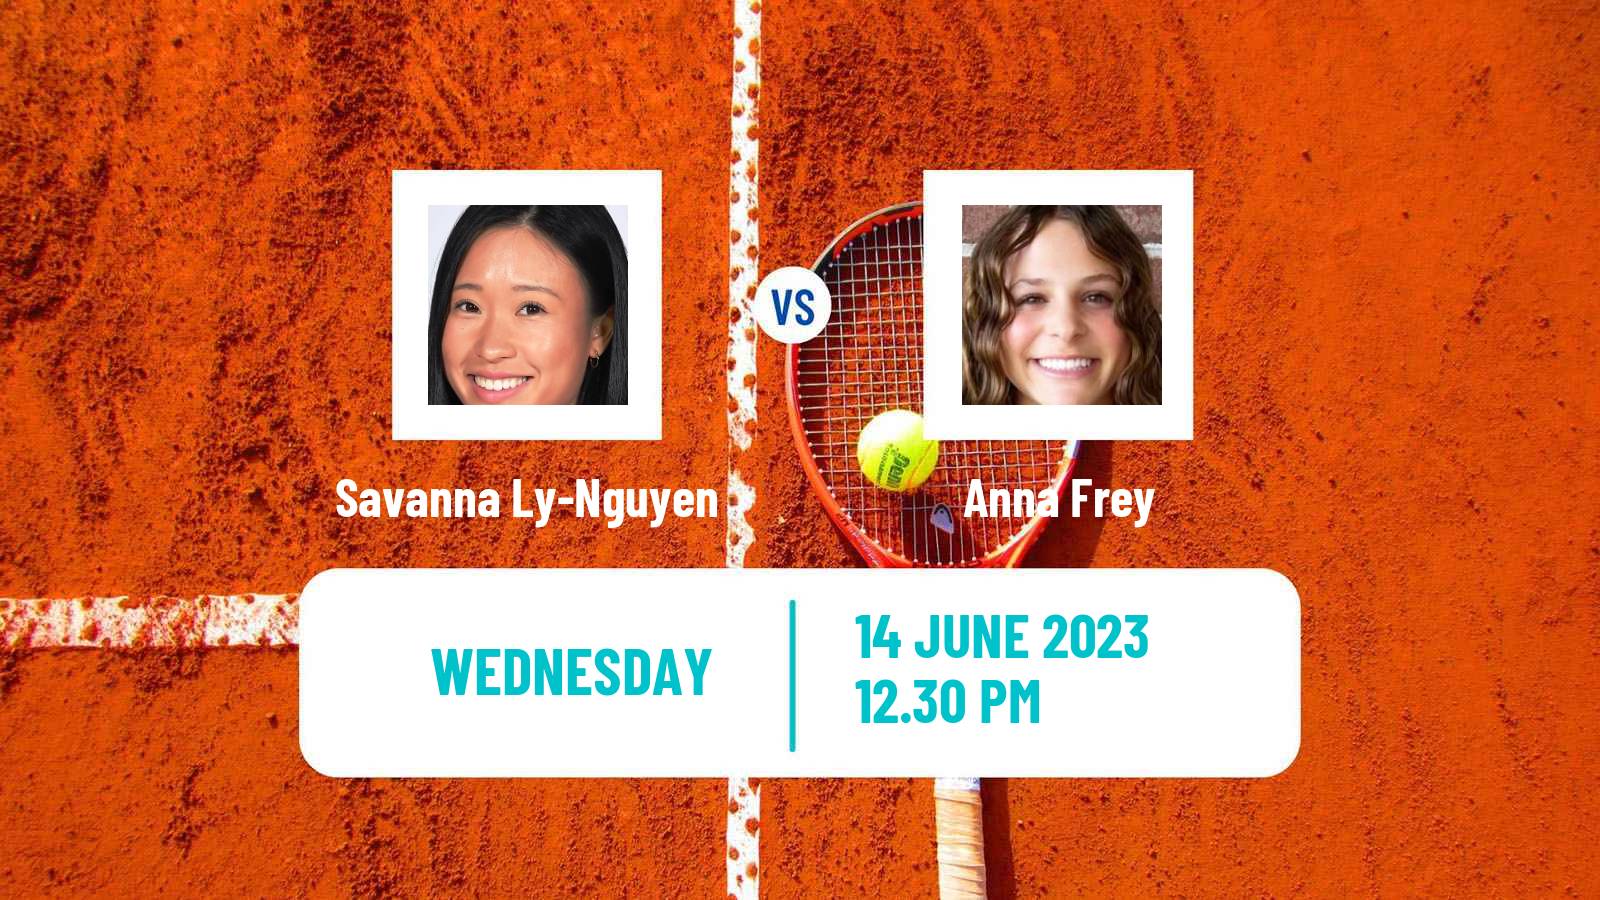 Tennis ITF W25 Colorado Springs Women Savanna Ly-Nguyen - Anna Frey